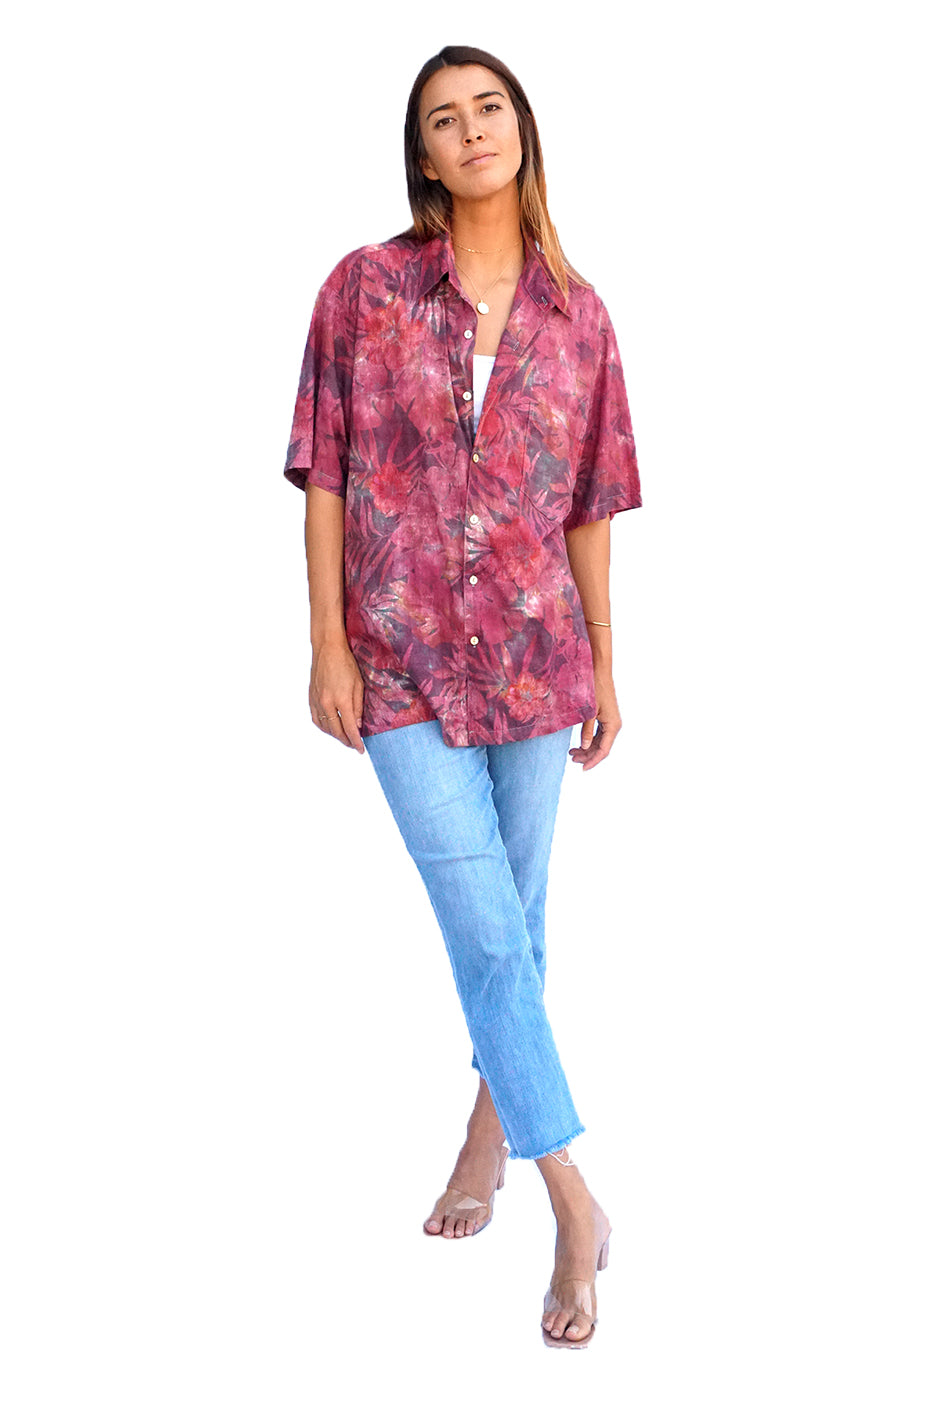 One of a kind handmade embellished Tie Dye Kai aloha shirt by Paneros Clothing. Kai Shirt // Midsummer Tie Dye, Size M. View 2